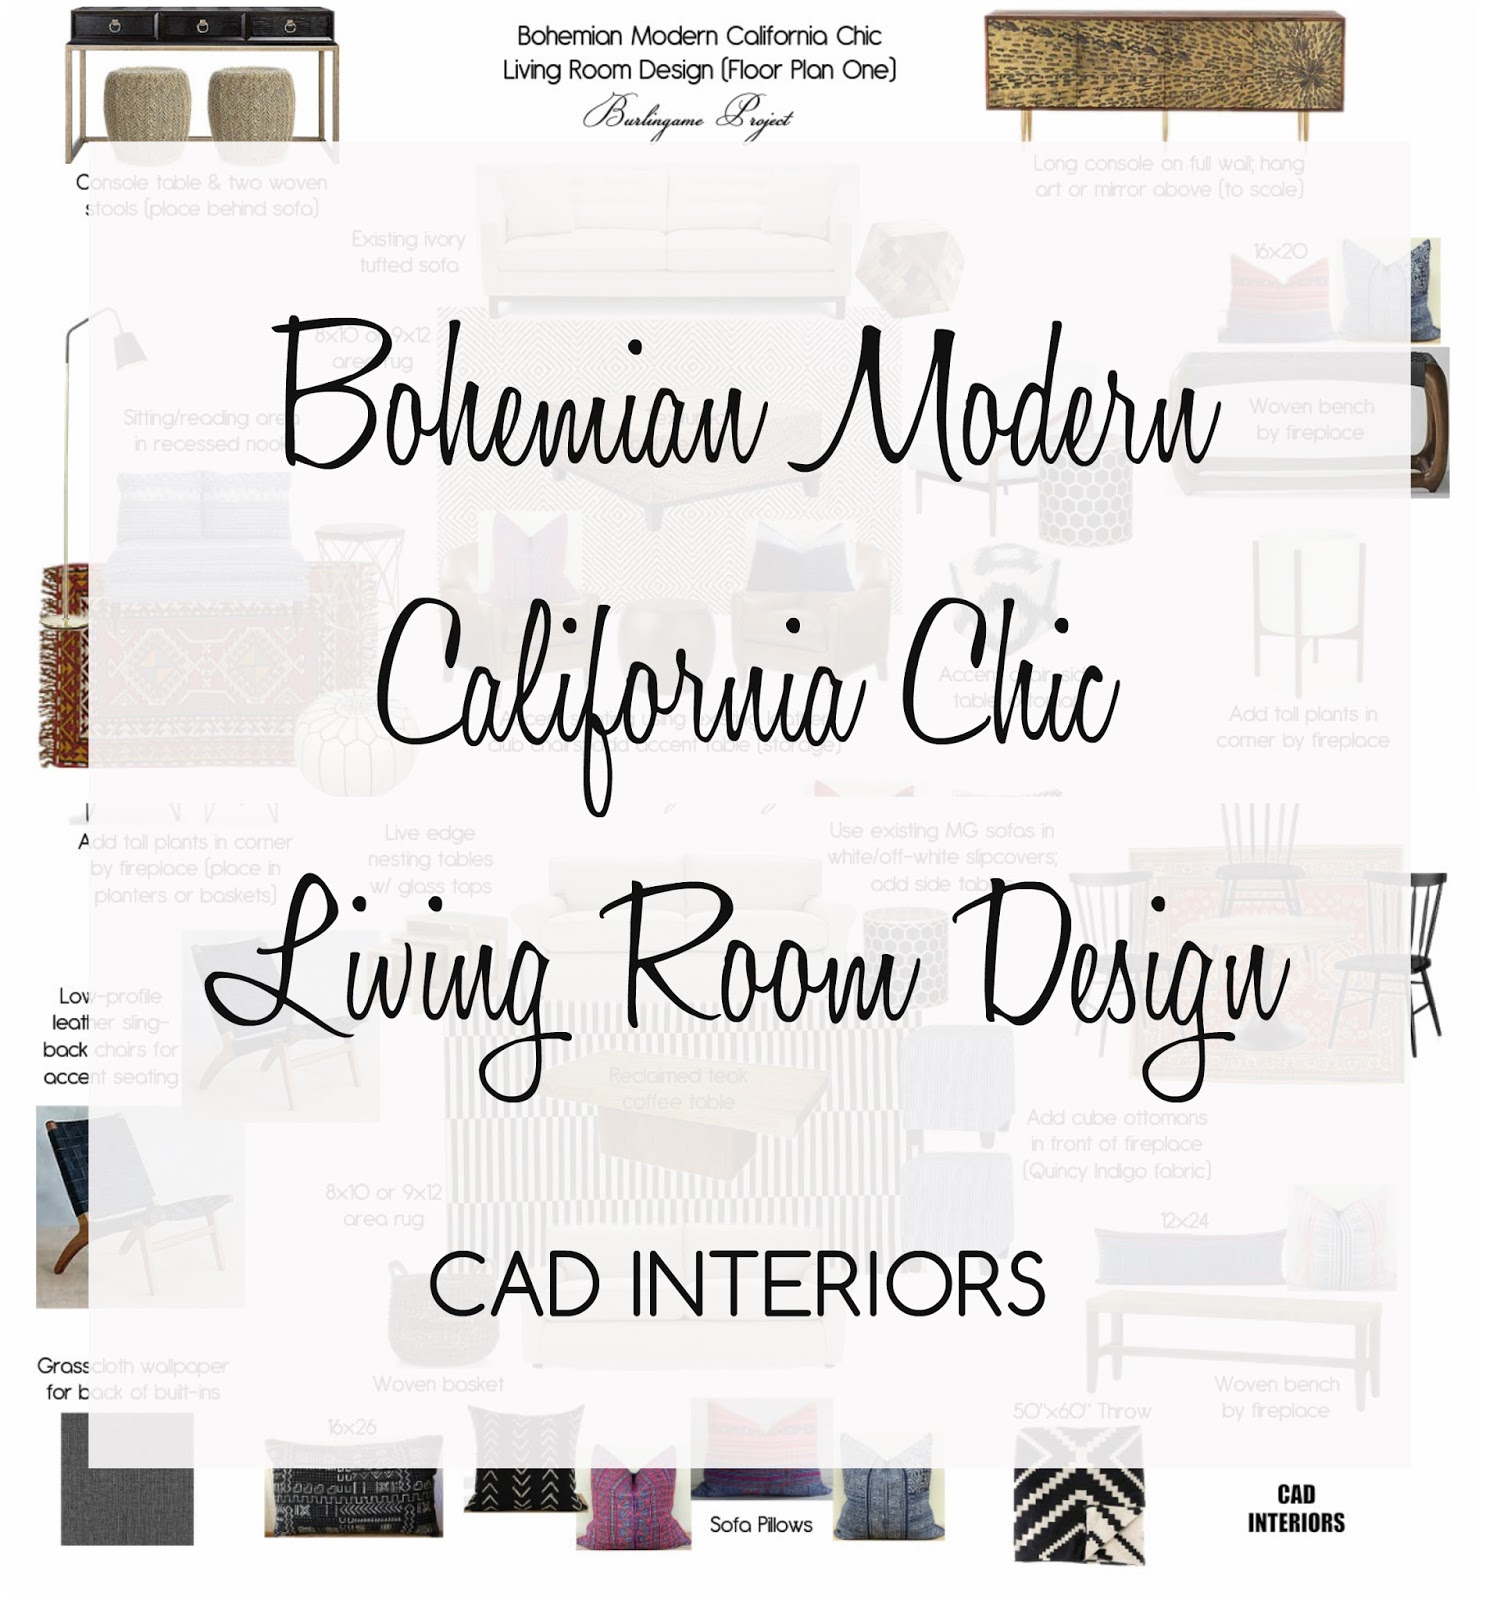 e-design interior design decorating services